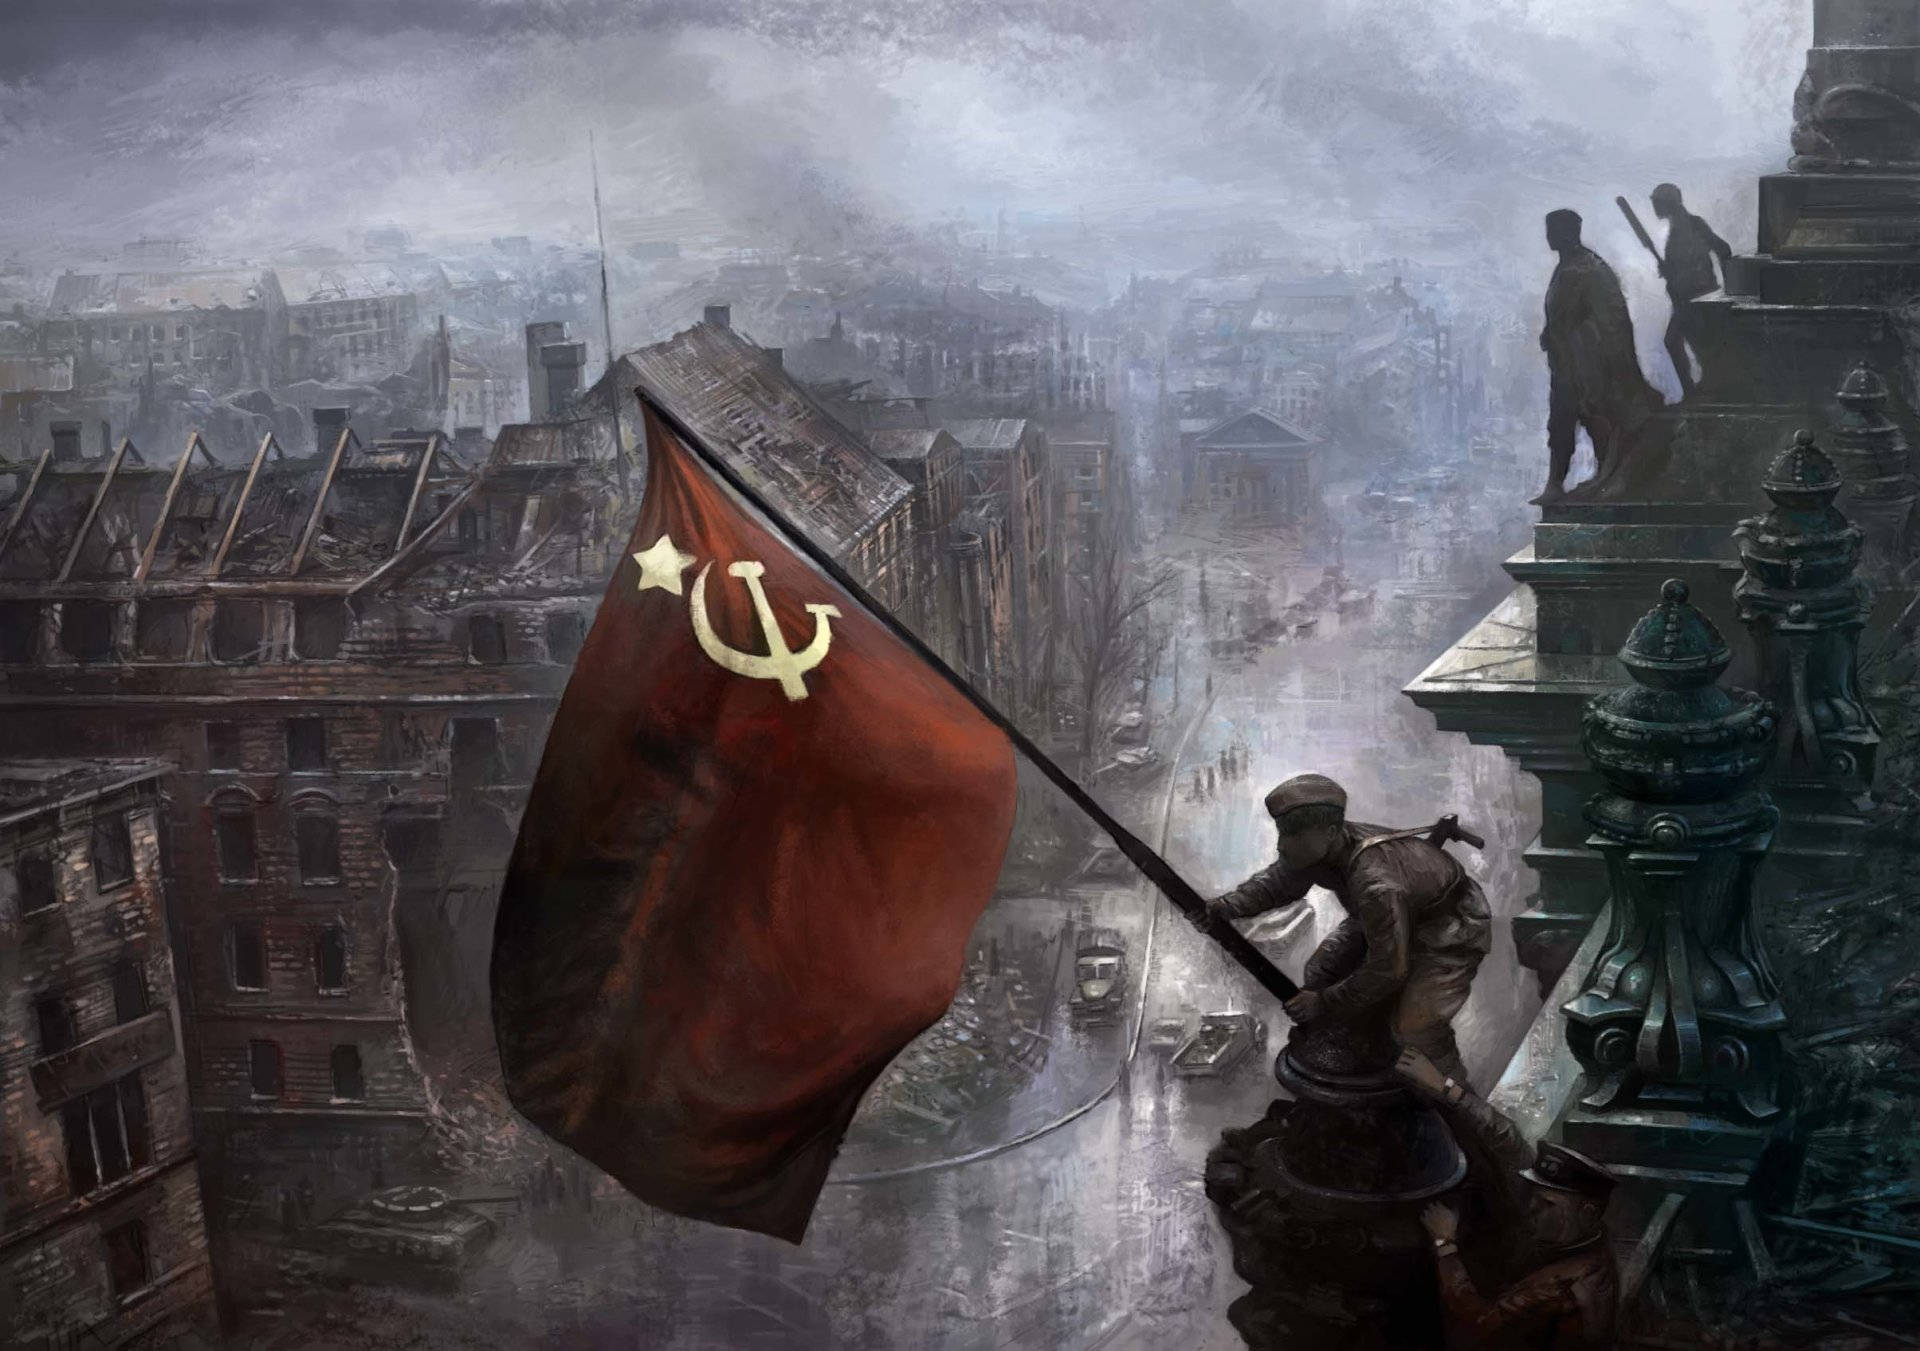 Winkendeflagge Der Sowjetunion Im Krieg. Wallpaper